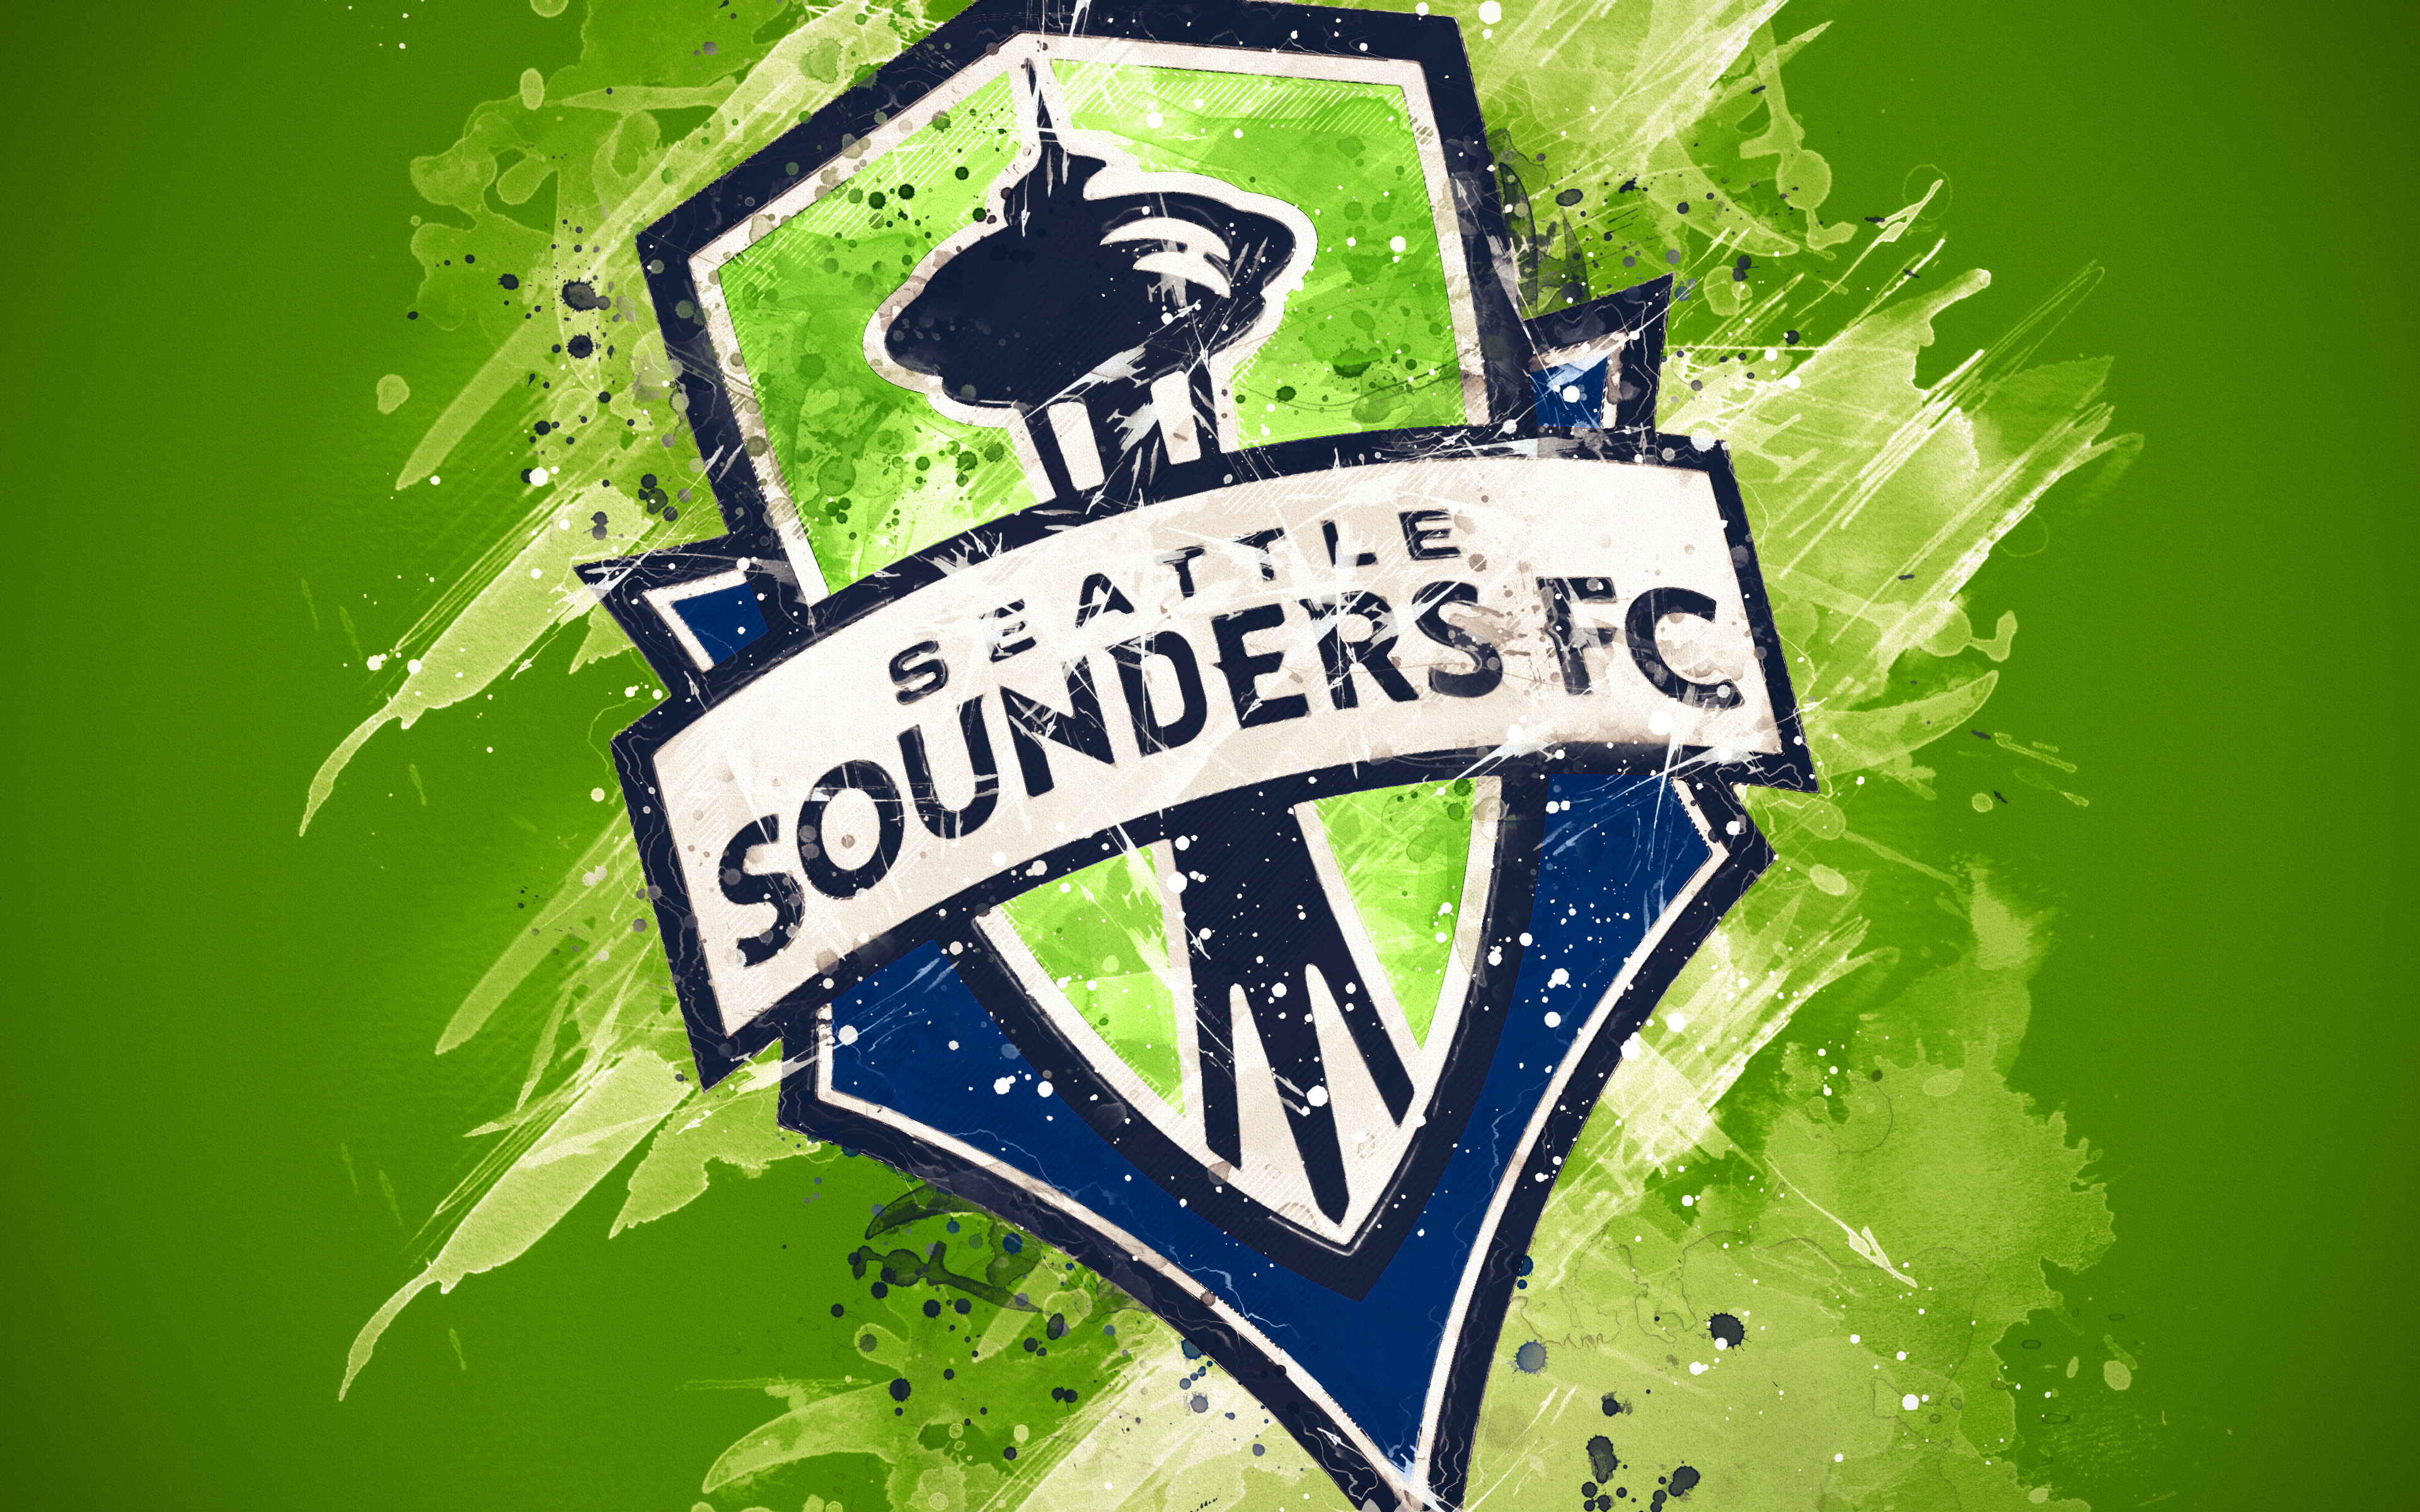 Seattle Sounders Fc 4k Ultra HD Wallpaper Background Image